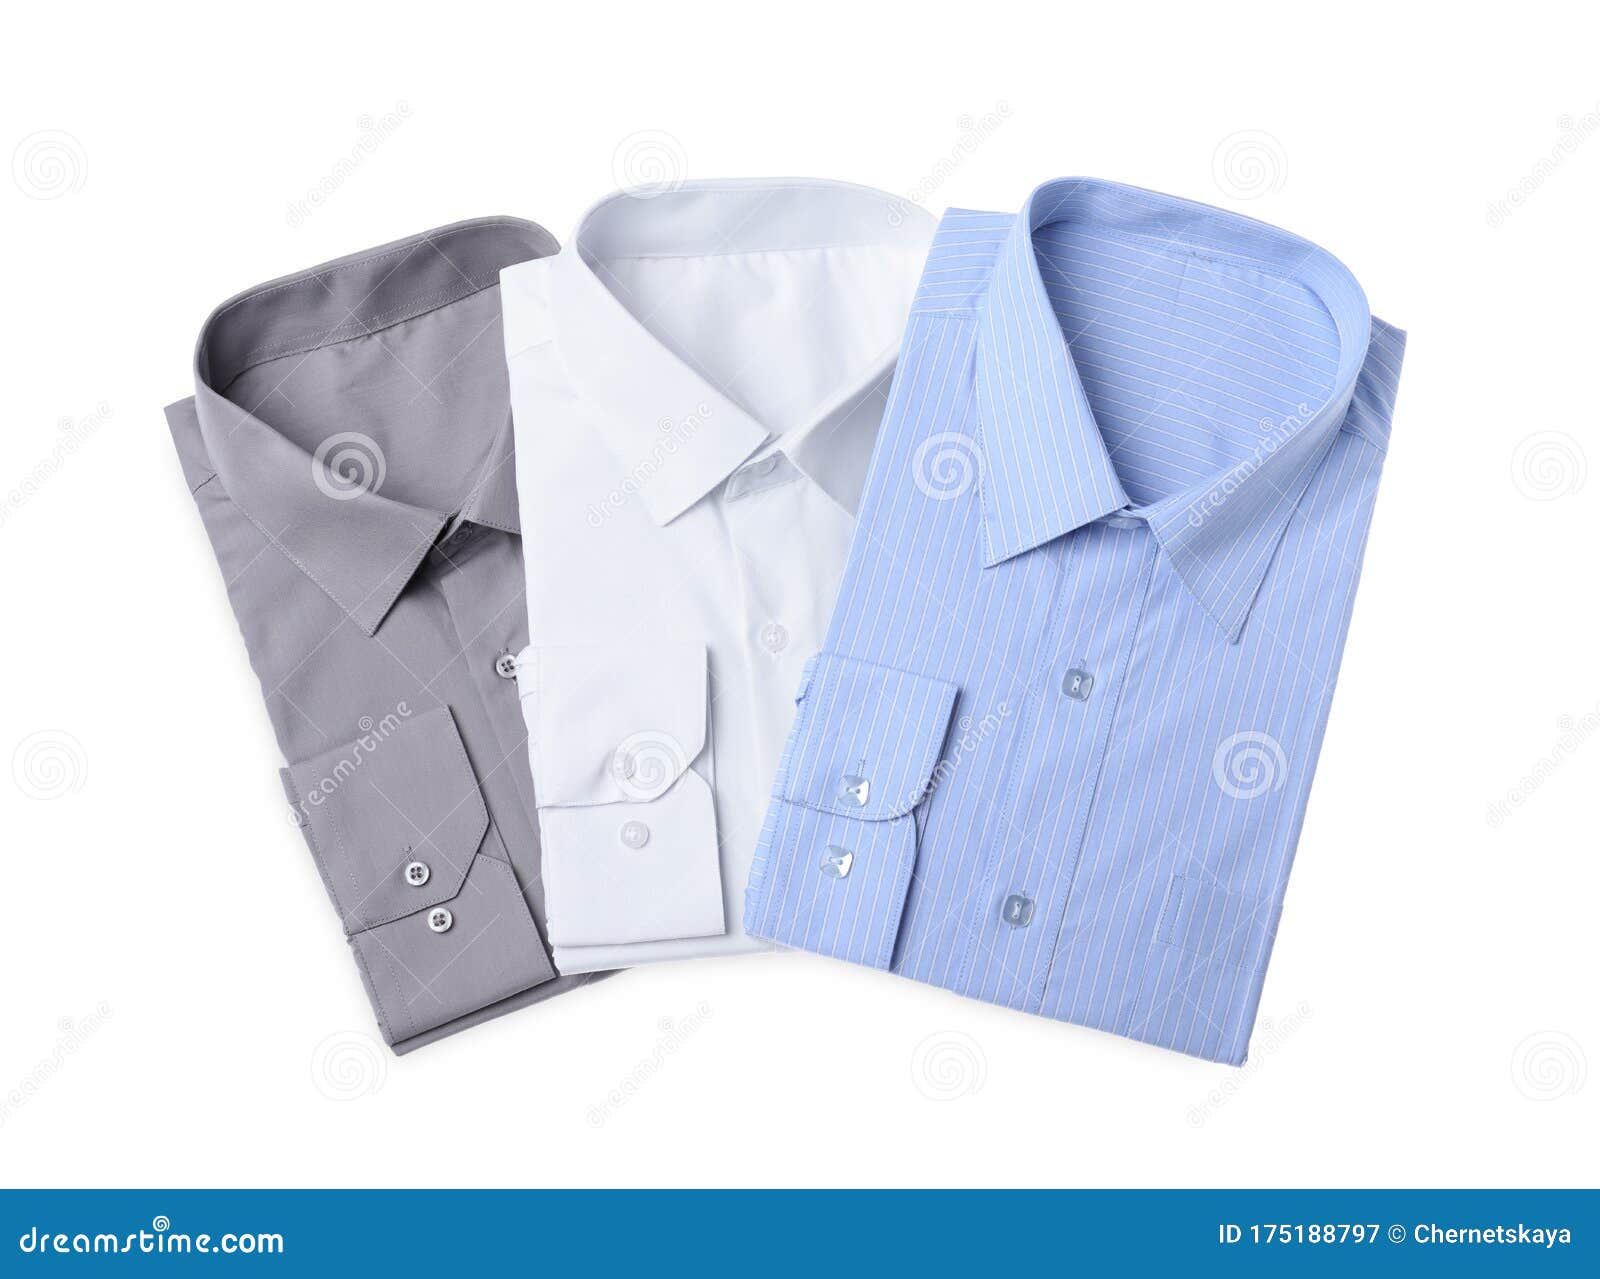 Stylish Shirts Isolated on White. Dry-cleaning Service Stock Image ...